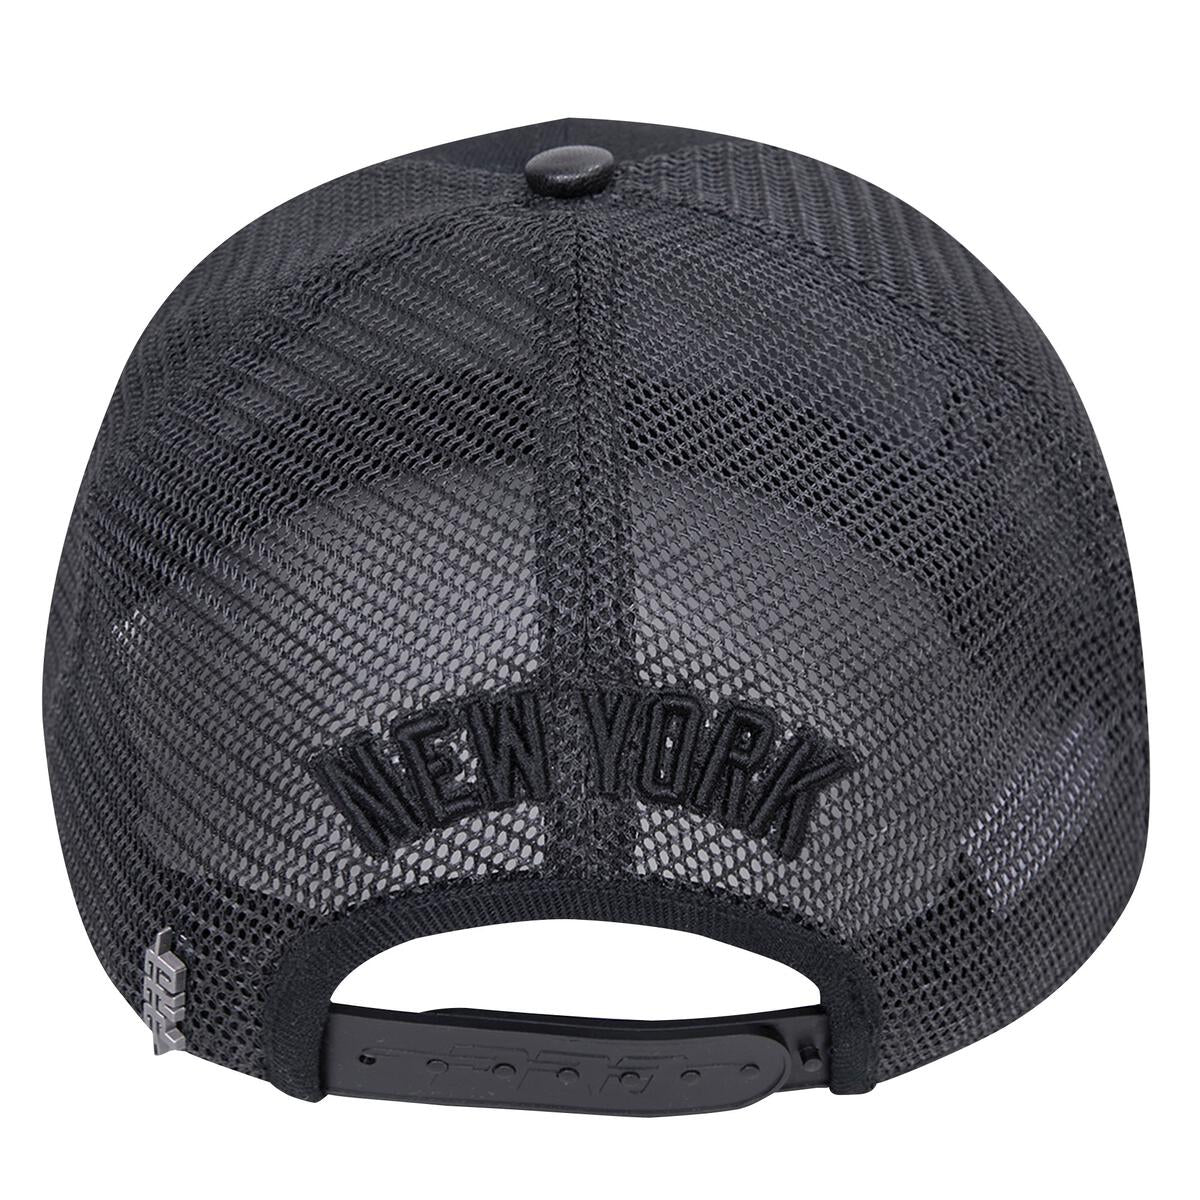 PRO STANDARD - NEW YORK YANKEES BLACK OUT CLASSIC MESH BACK TRUCKER HAT